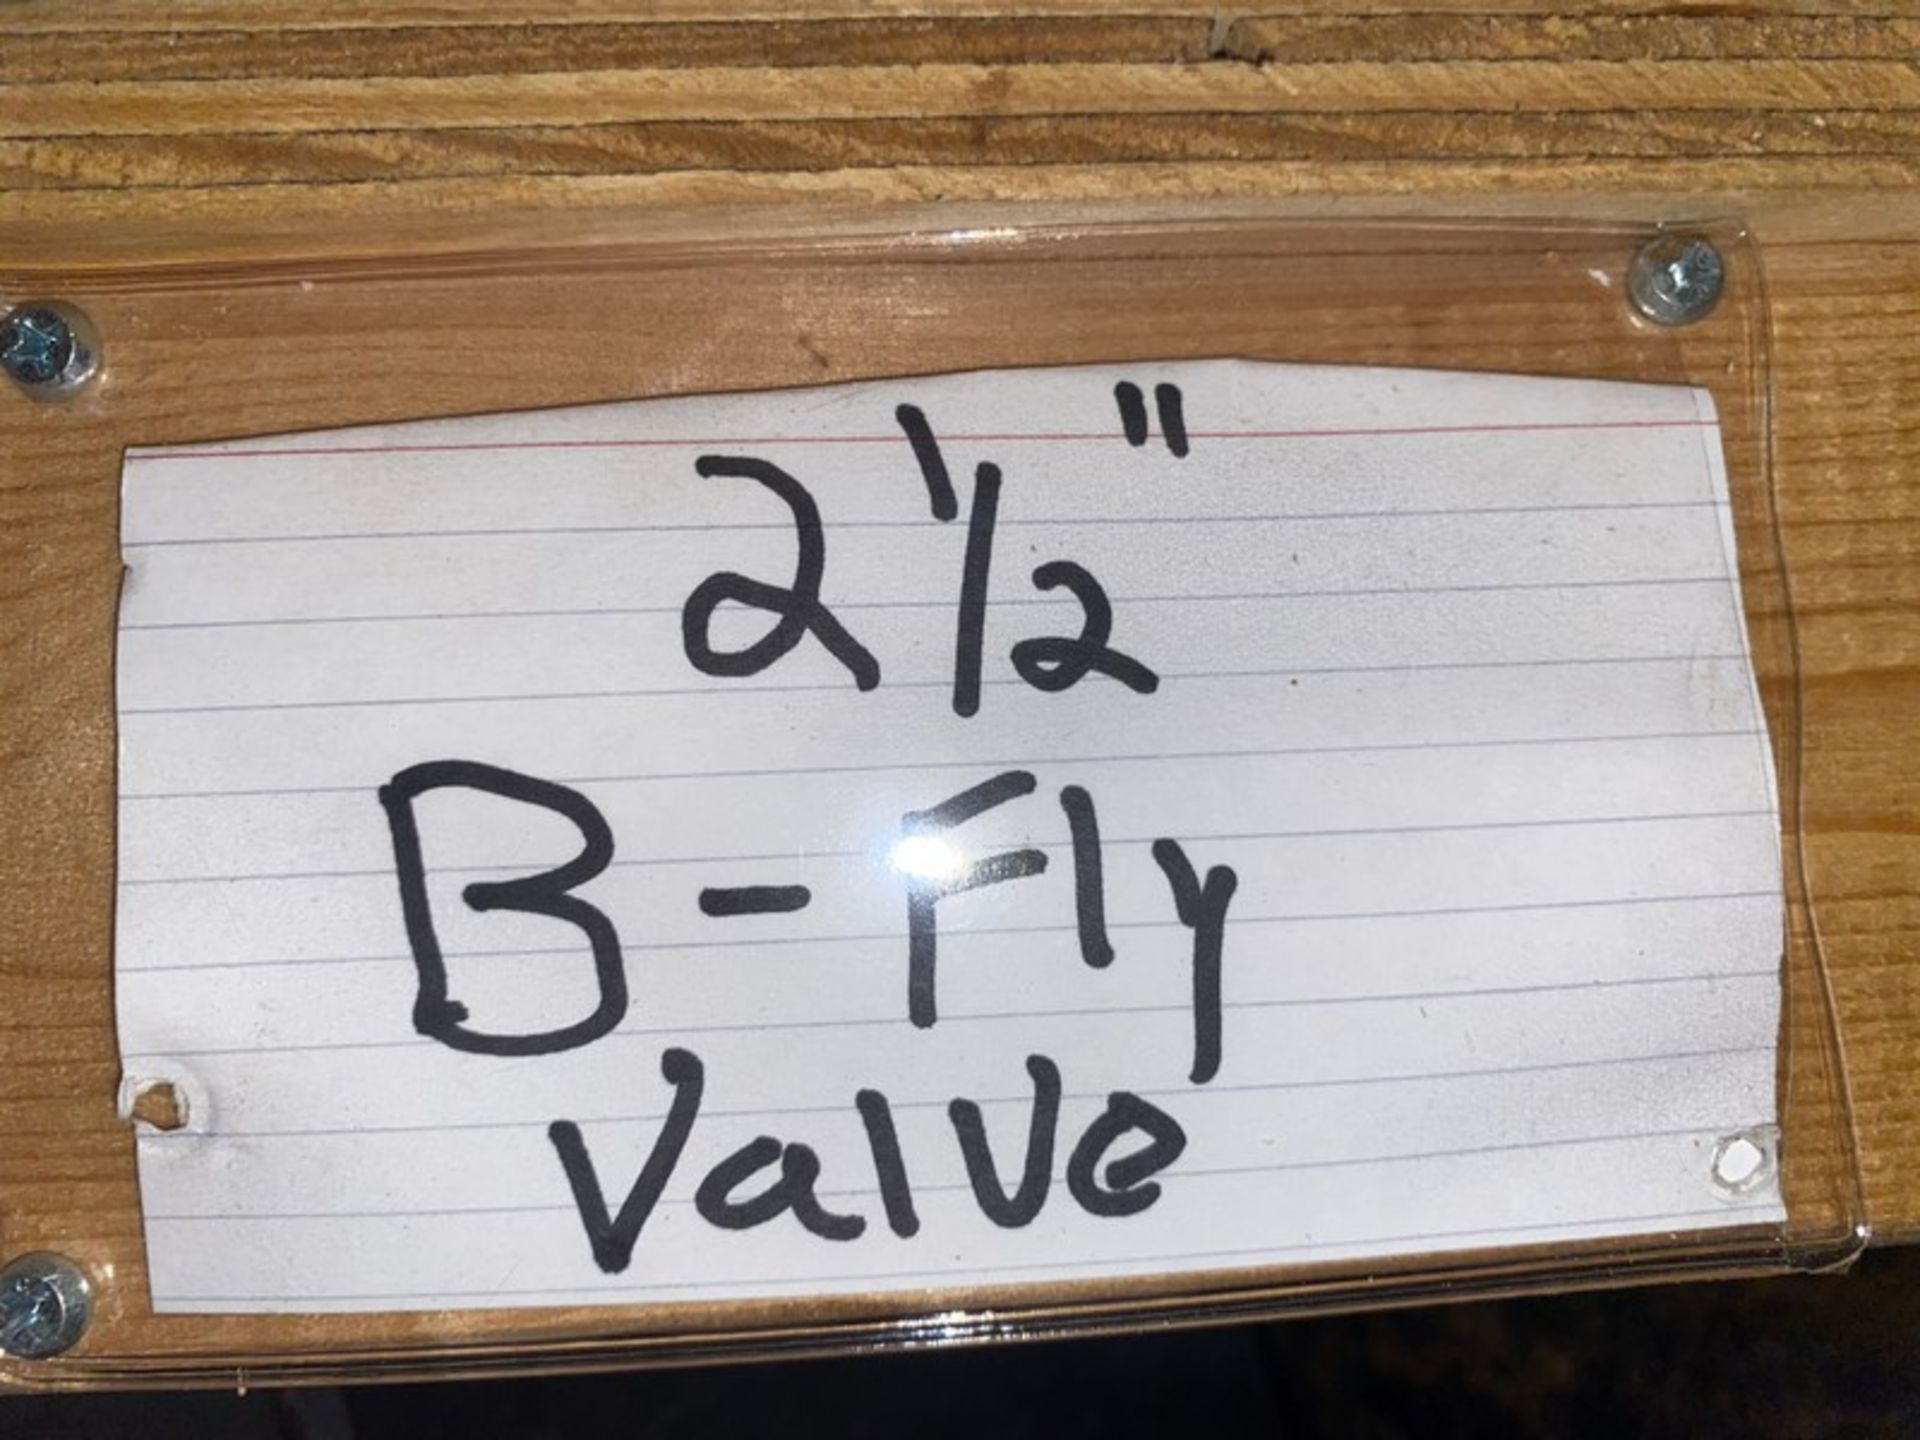 2 1/2 B-Fly Valve3” B-Fly Valve4” B-Fly Valve5” B-Fly Valve6” Butterfly Valve2” Groved Valve3” - Bild 6 aus 6